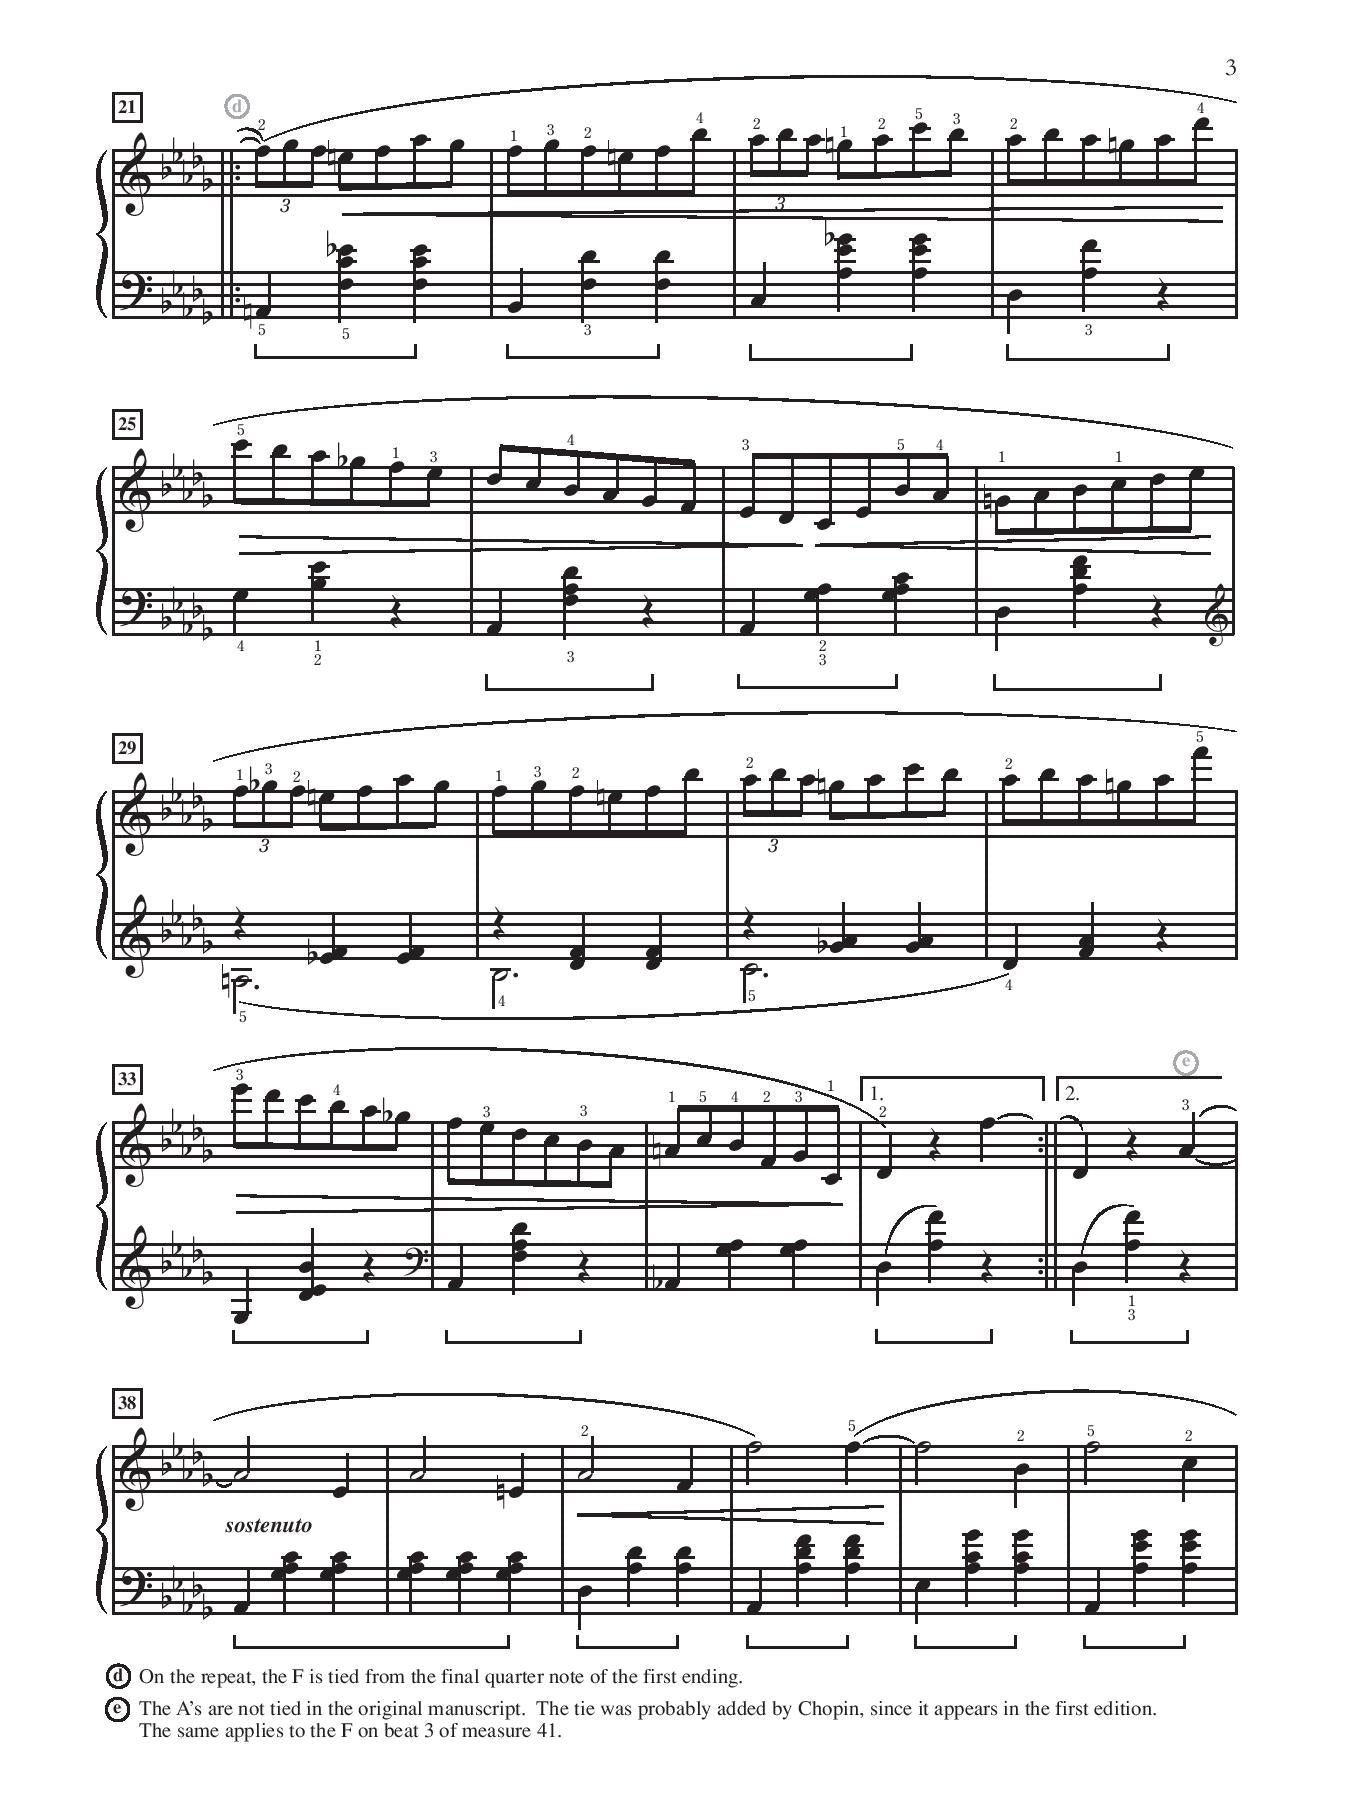 Chopin: Waltz in D-flat Major, Opus 64, No. 1